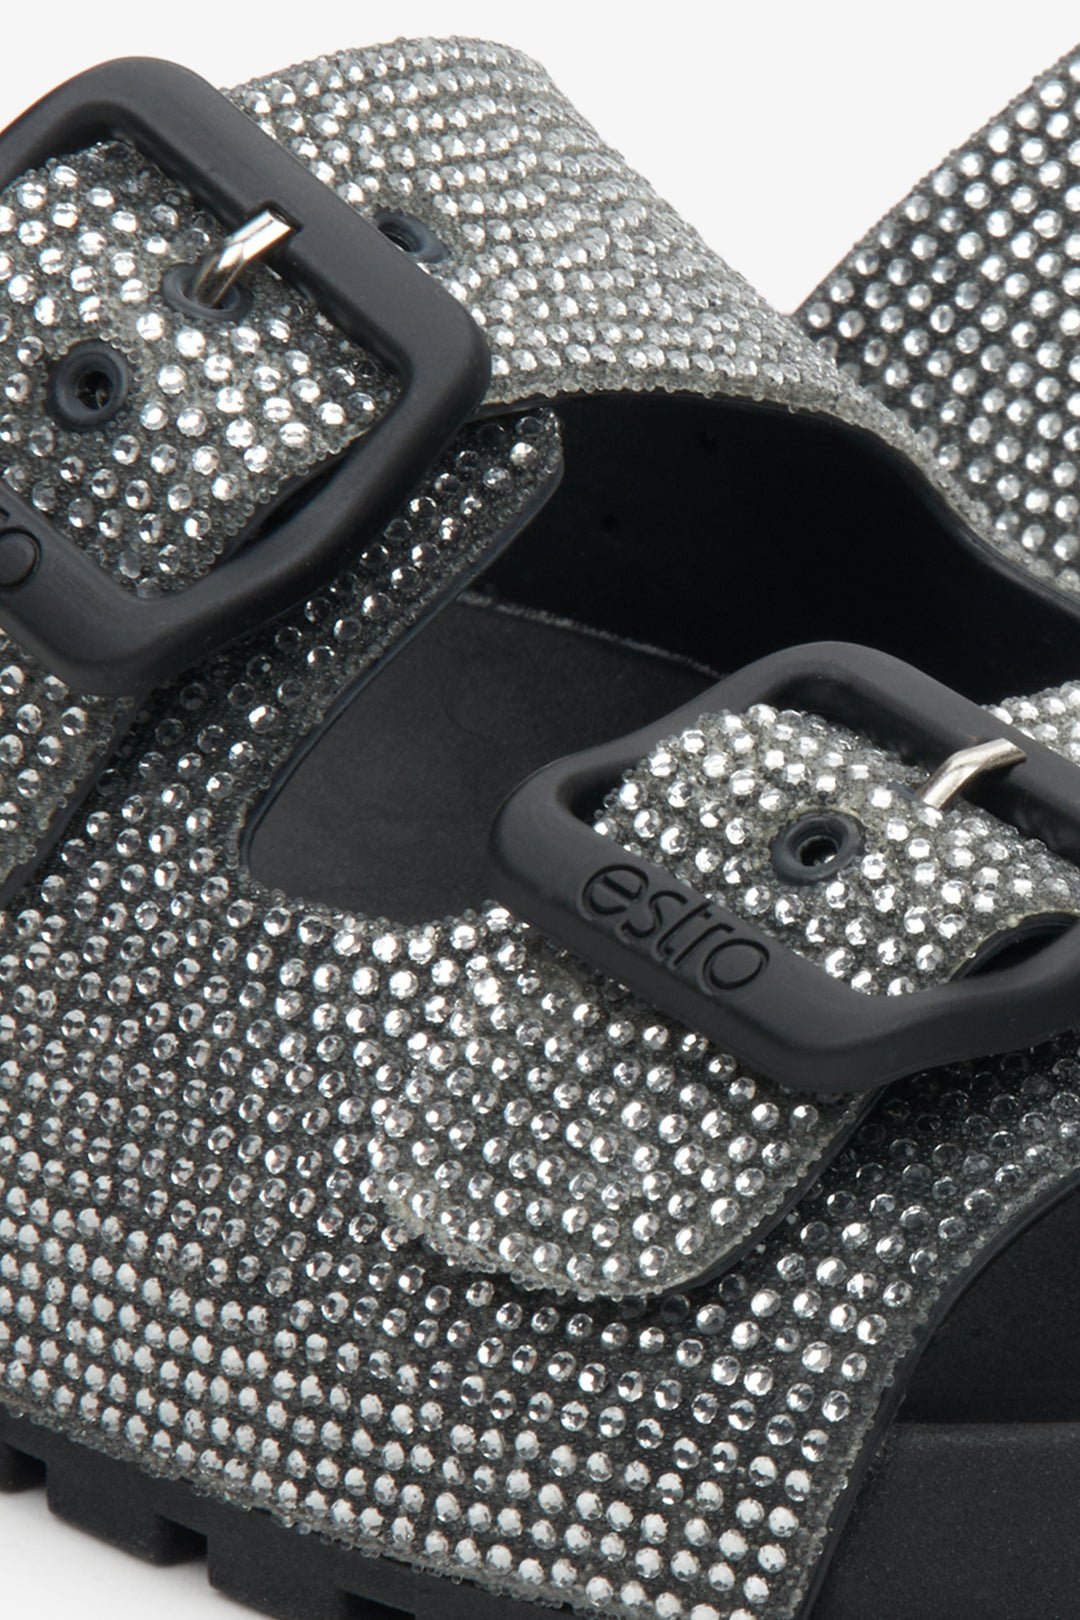 Women's black Estro flip-flops with rhinestones - close-up on details.